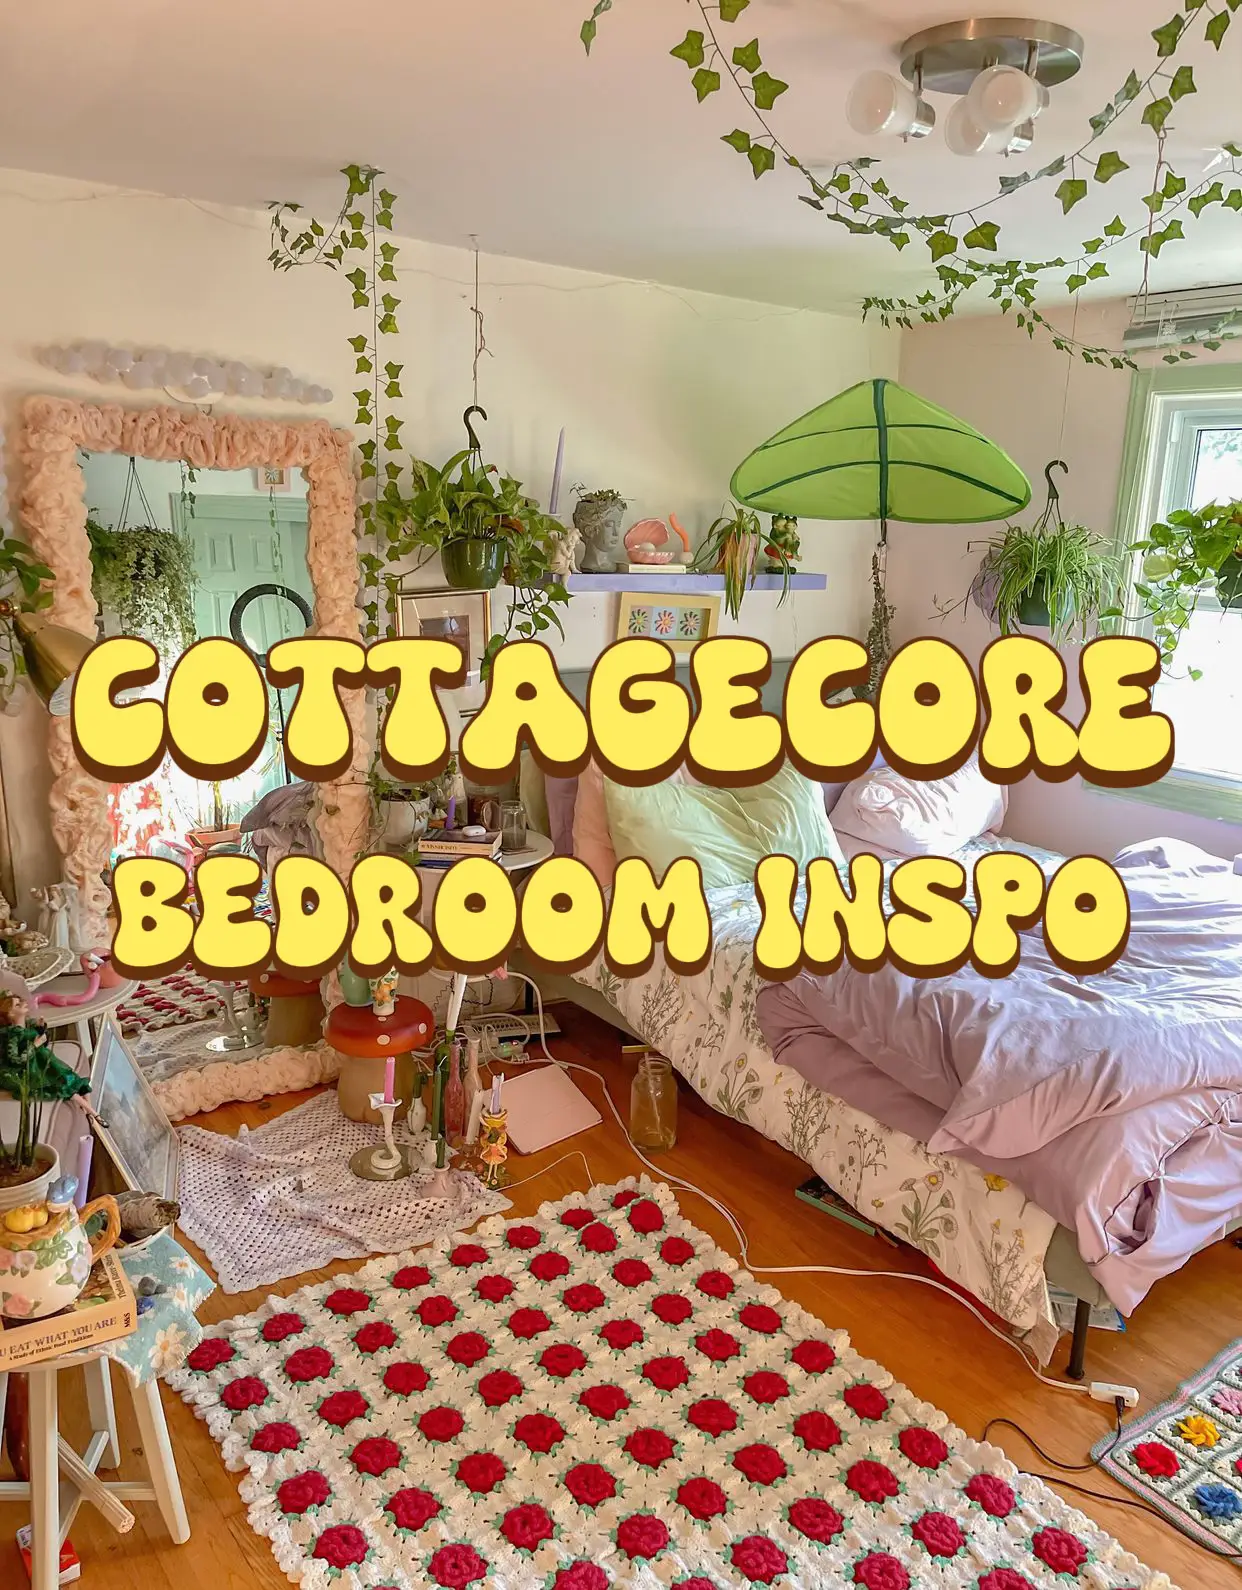 Cottagecore Room Decor Ideas  Aesthetic Room Inspiration from Dormify -  Dormify